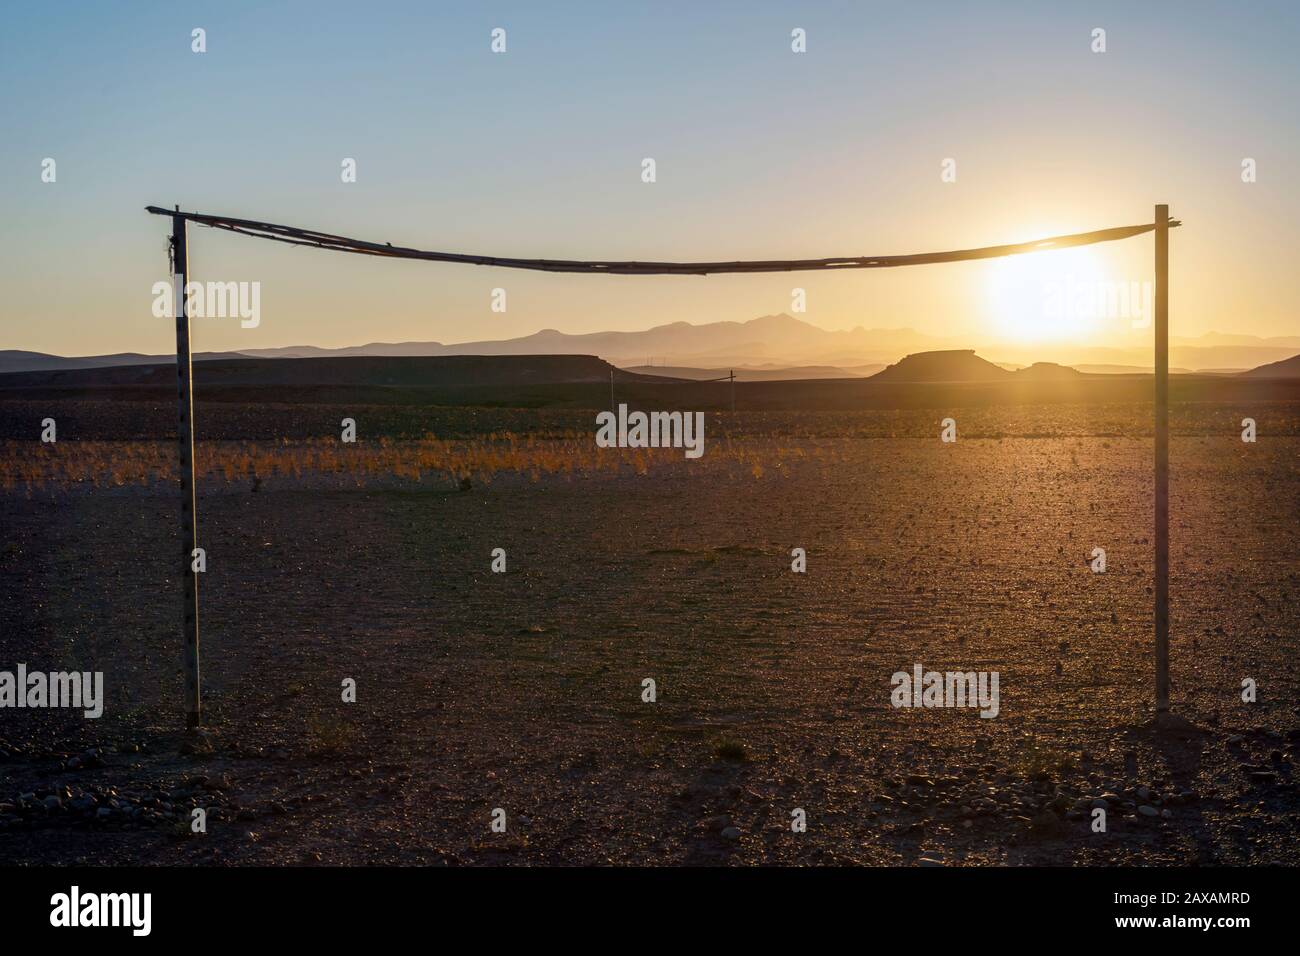 Playing soccer in desert dust beneath the Rifa-Fort, Rifa, Kingdom